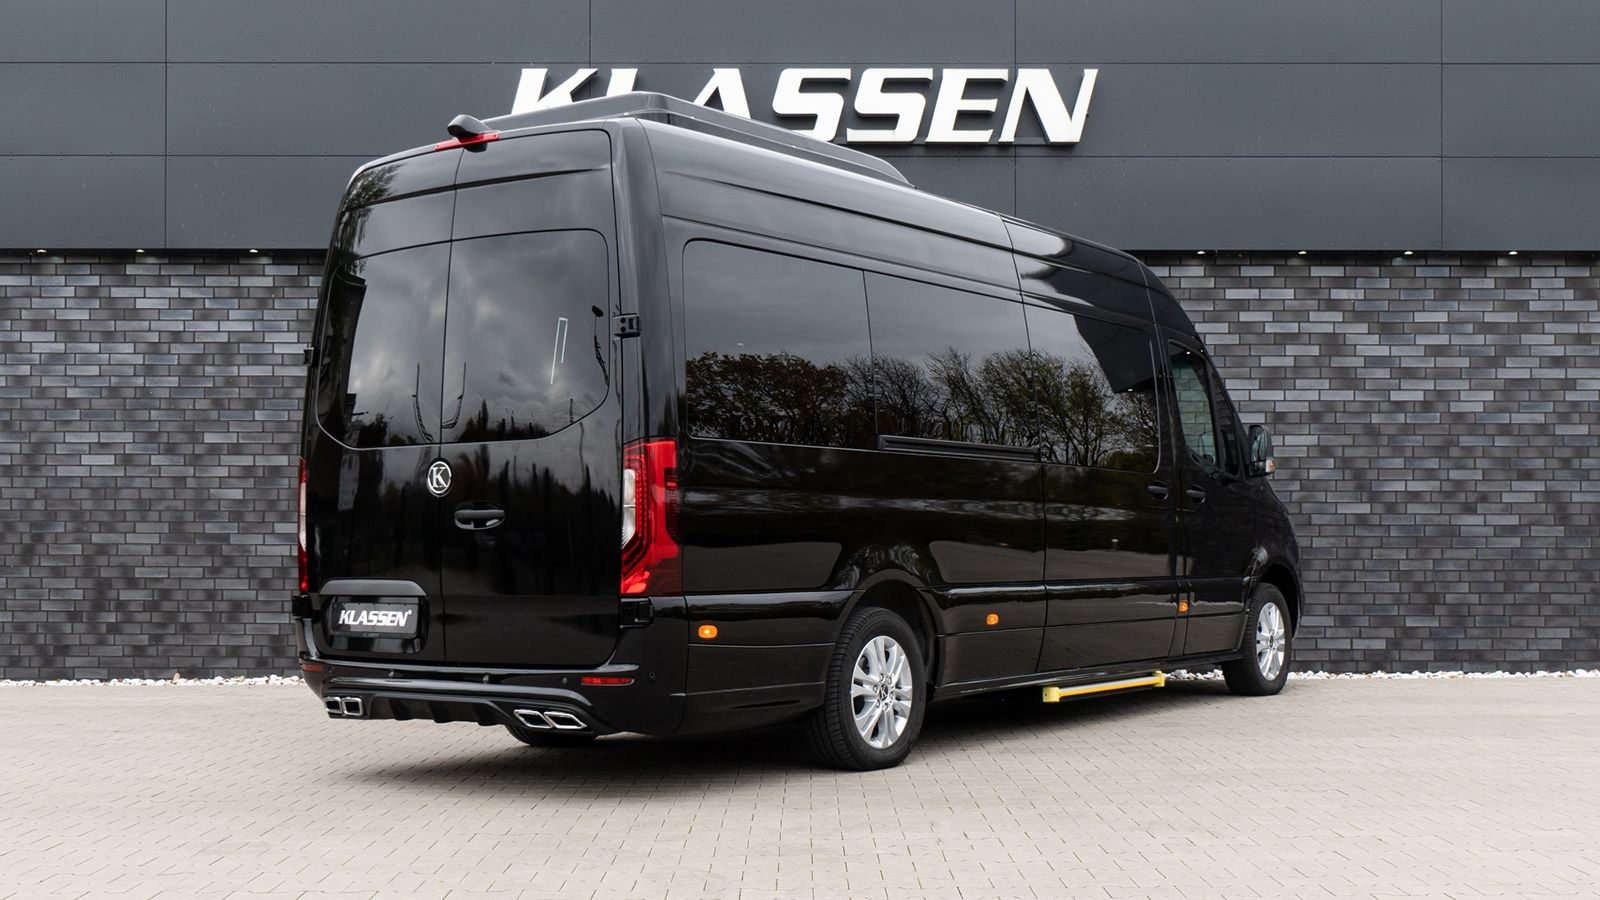 To Klassen Van στηρίζεται στο Sprinter 319 και φέρει τον 3λιτρο diesel κινητήρα των 190 ίππων της Mercedes-Benz.